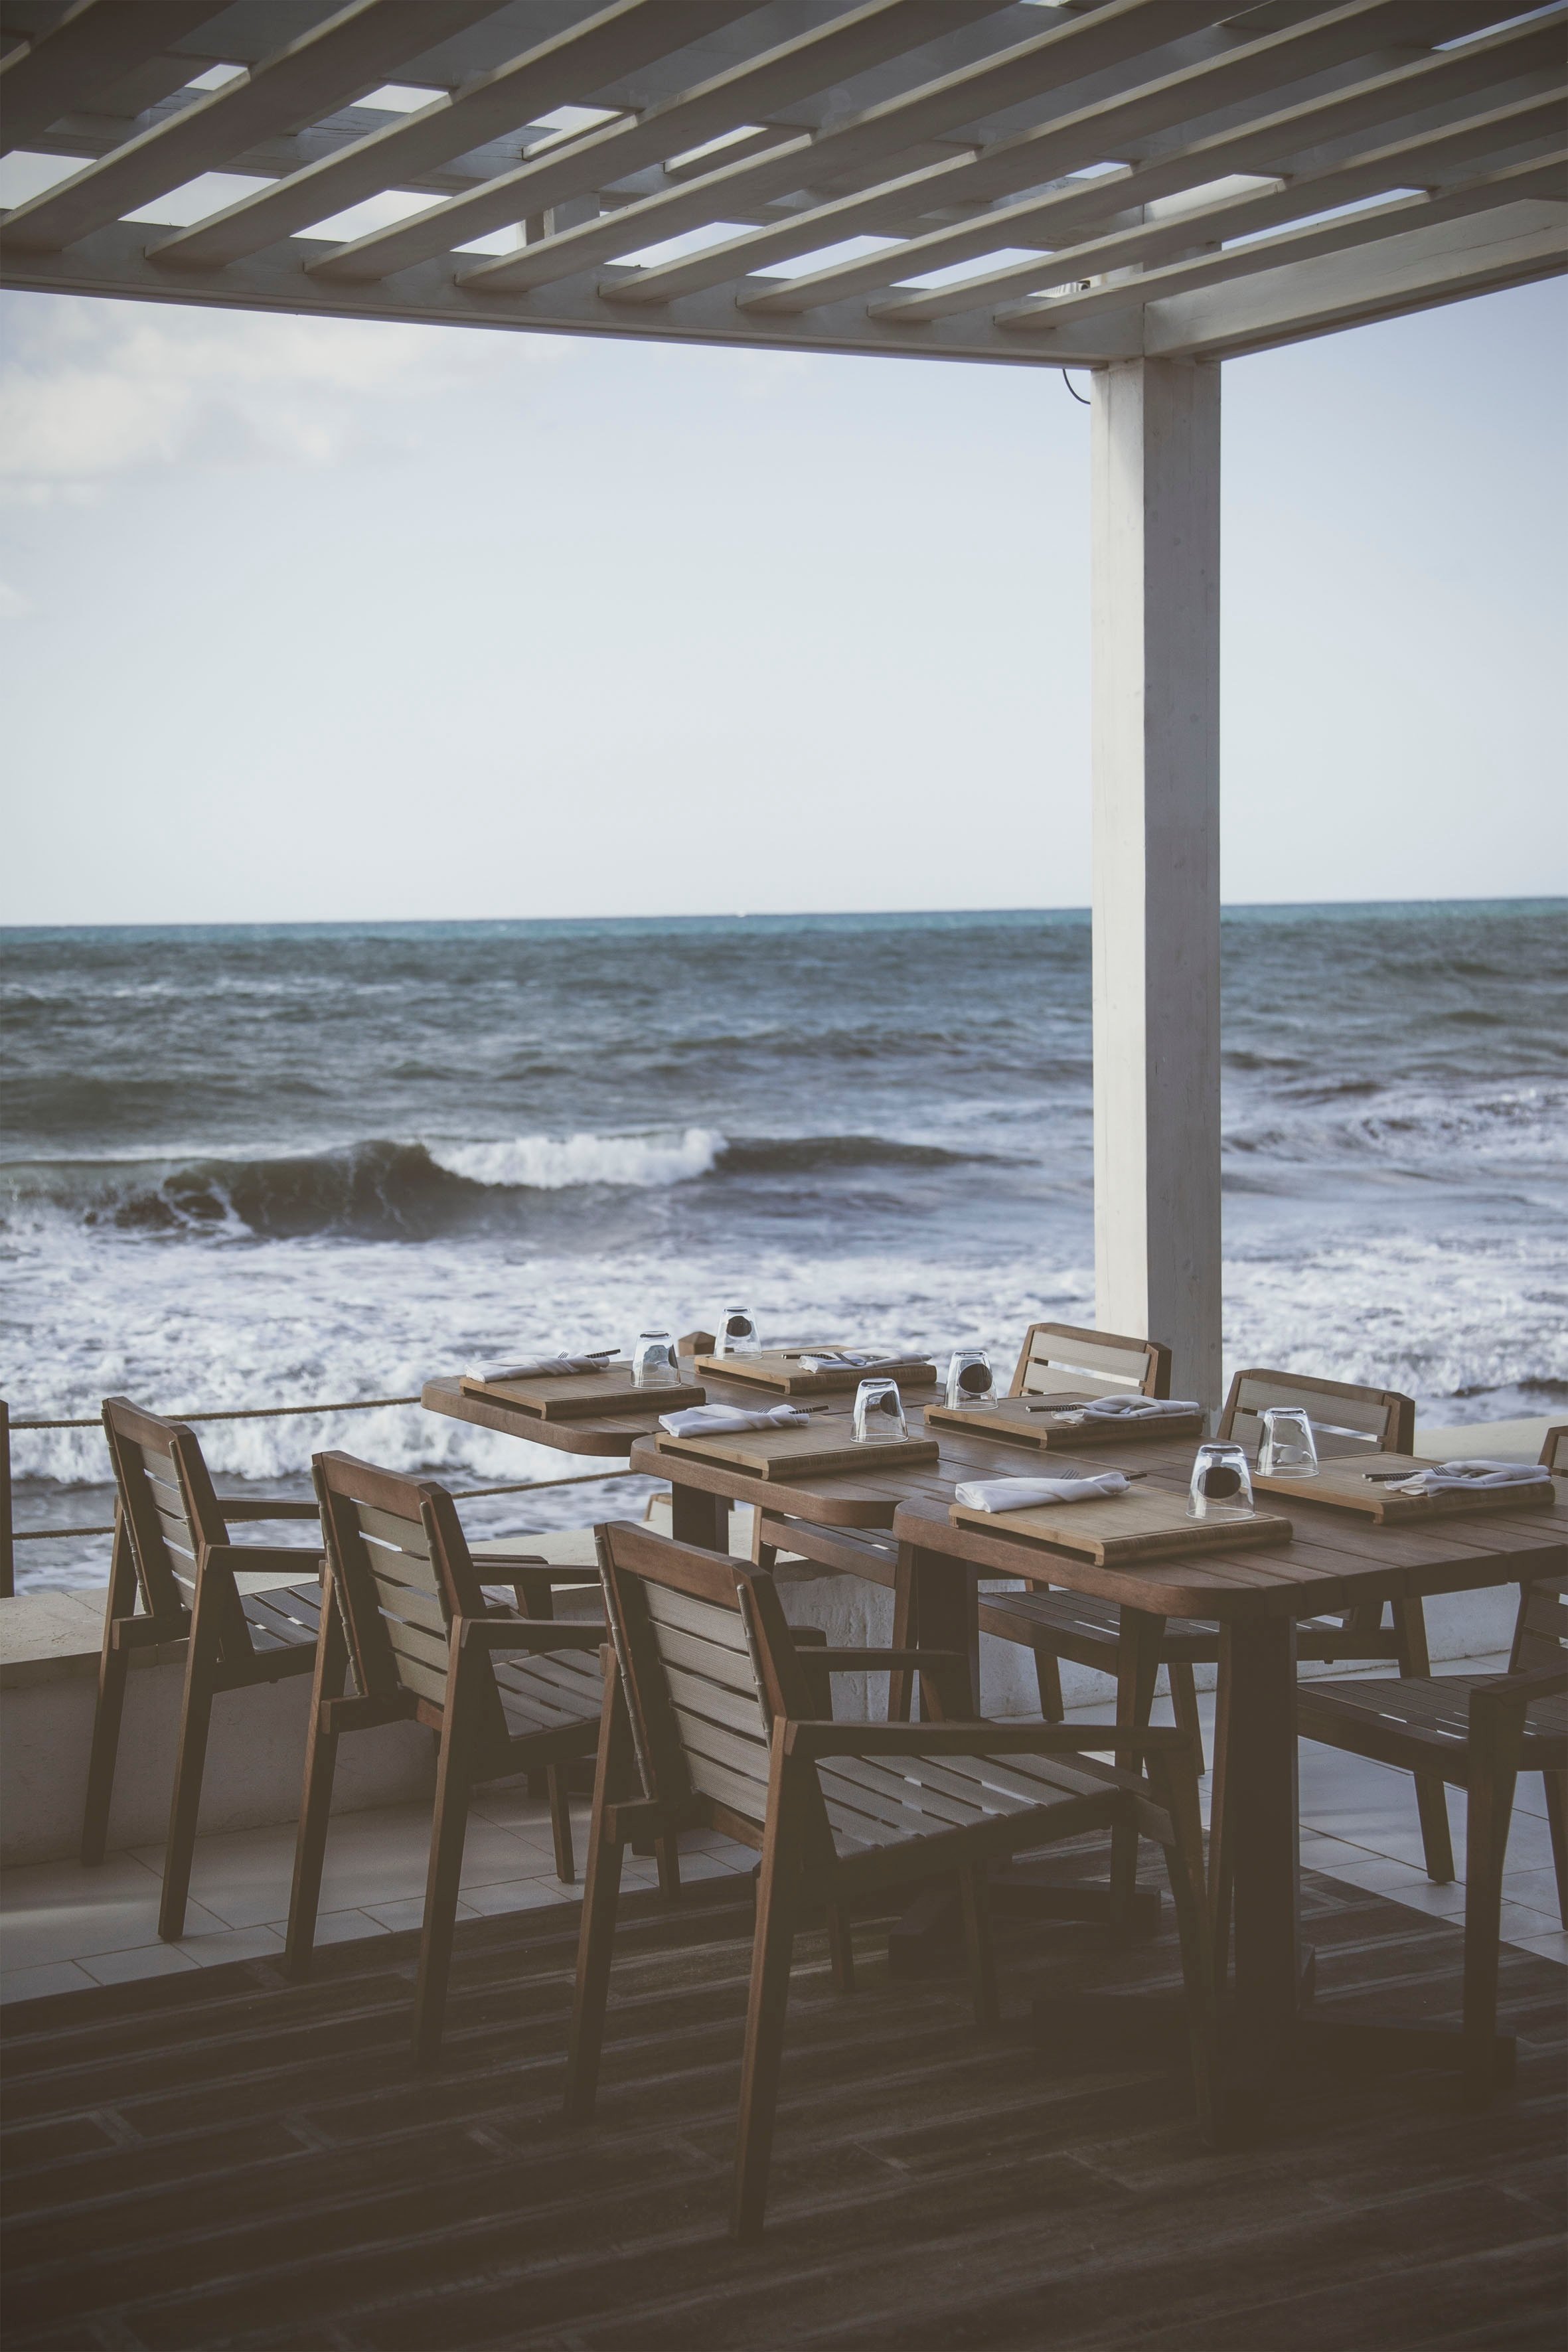 A restaurant by the ocean | Source: Unsplash.com